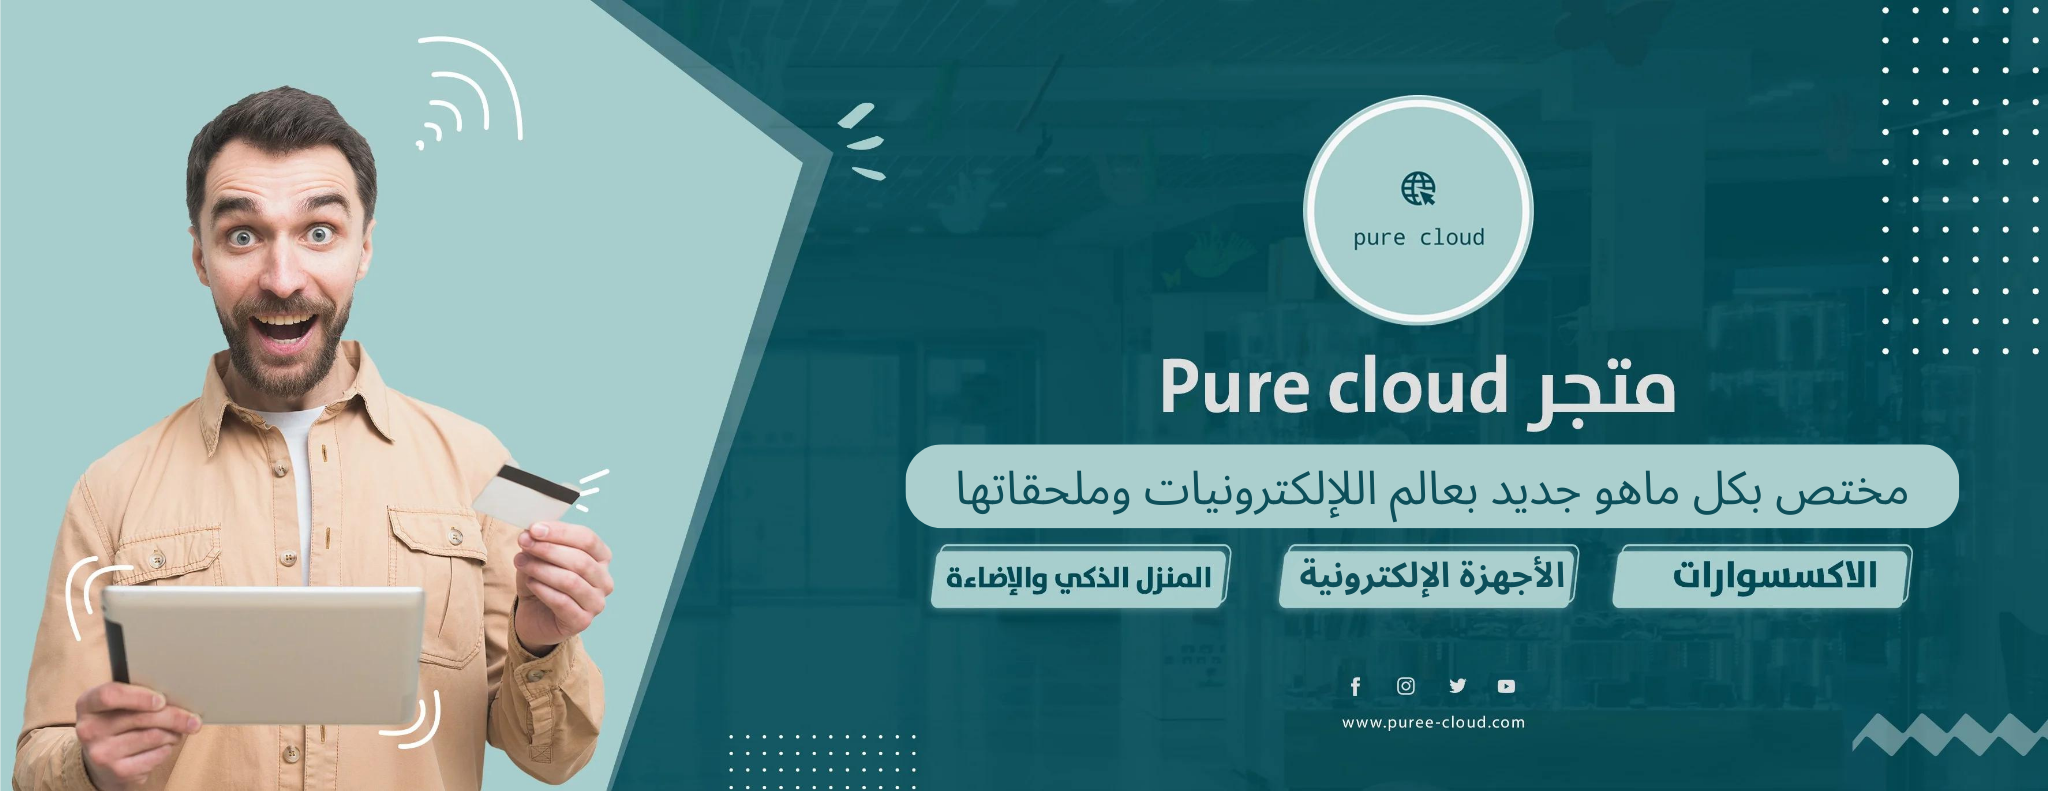 Pure cloud image-slider-0